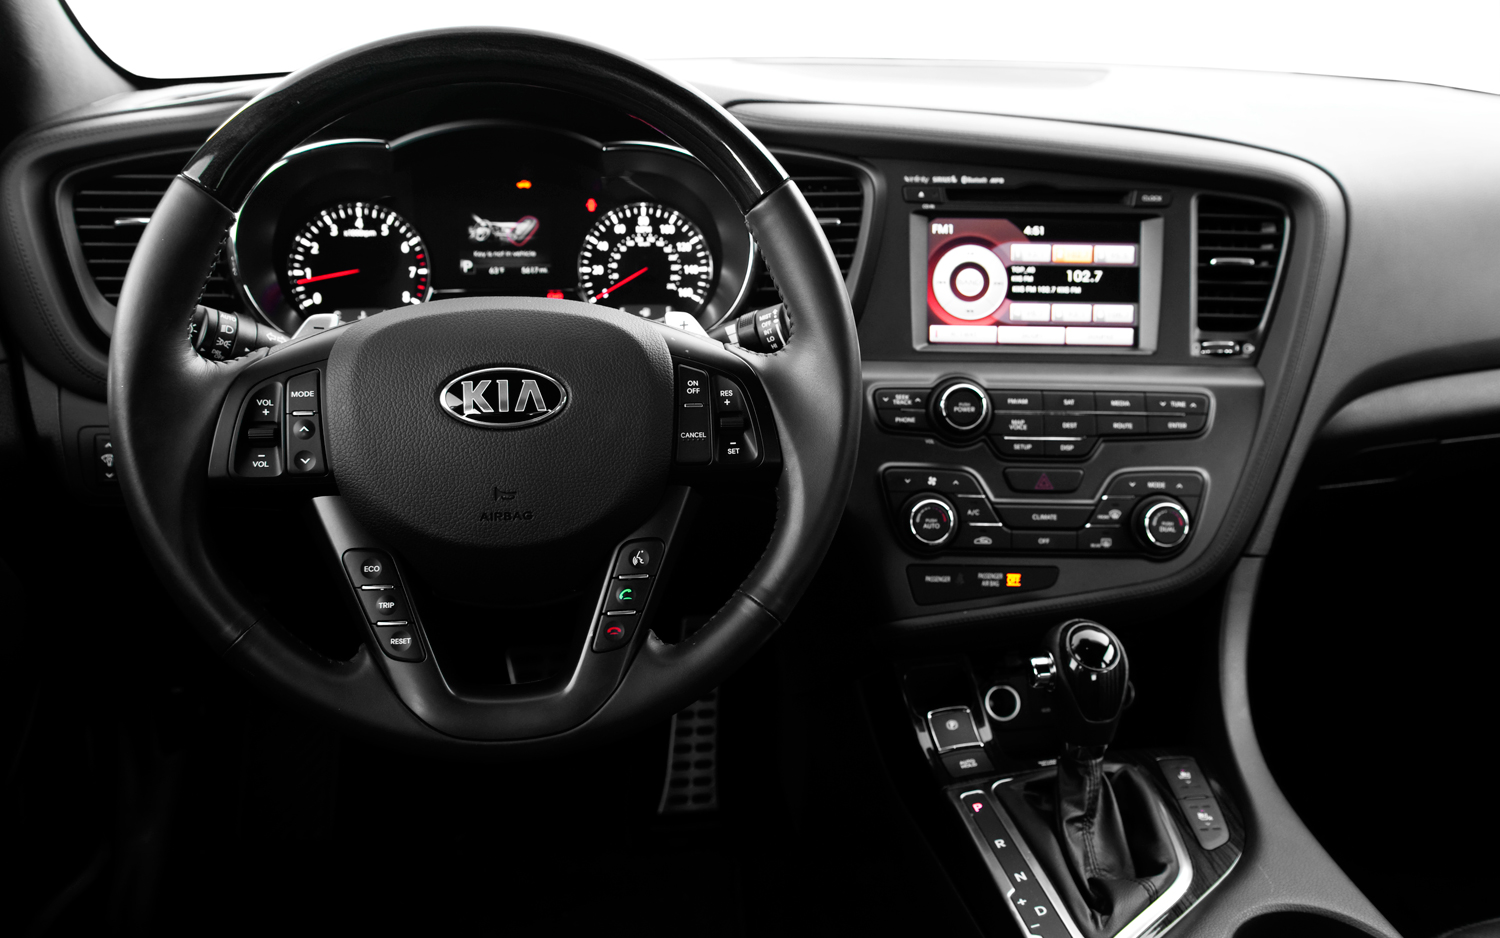 2013 Kia Optima Dashboard Interior View